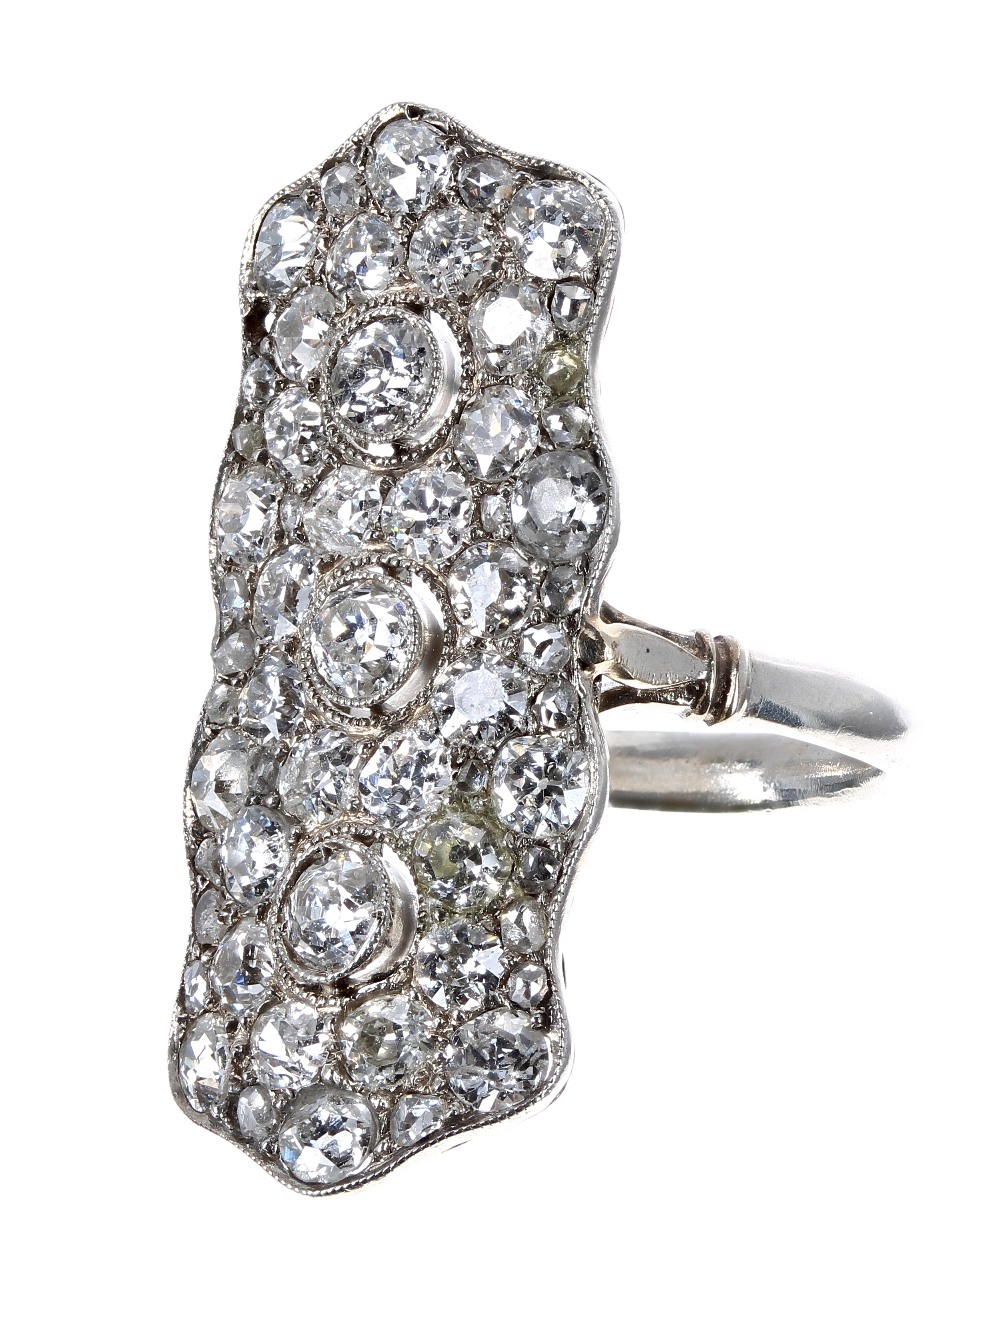 Impressive Art Deco platinum old-cut diamond plaque ring, with three central principal diamonds in a